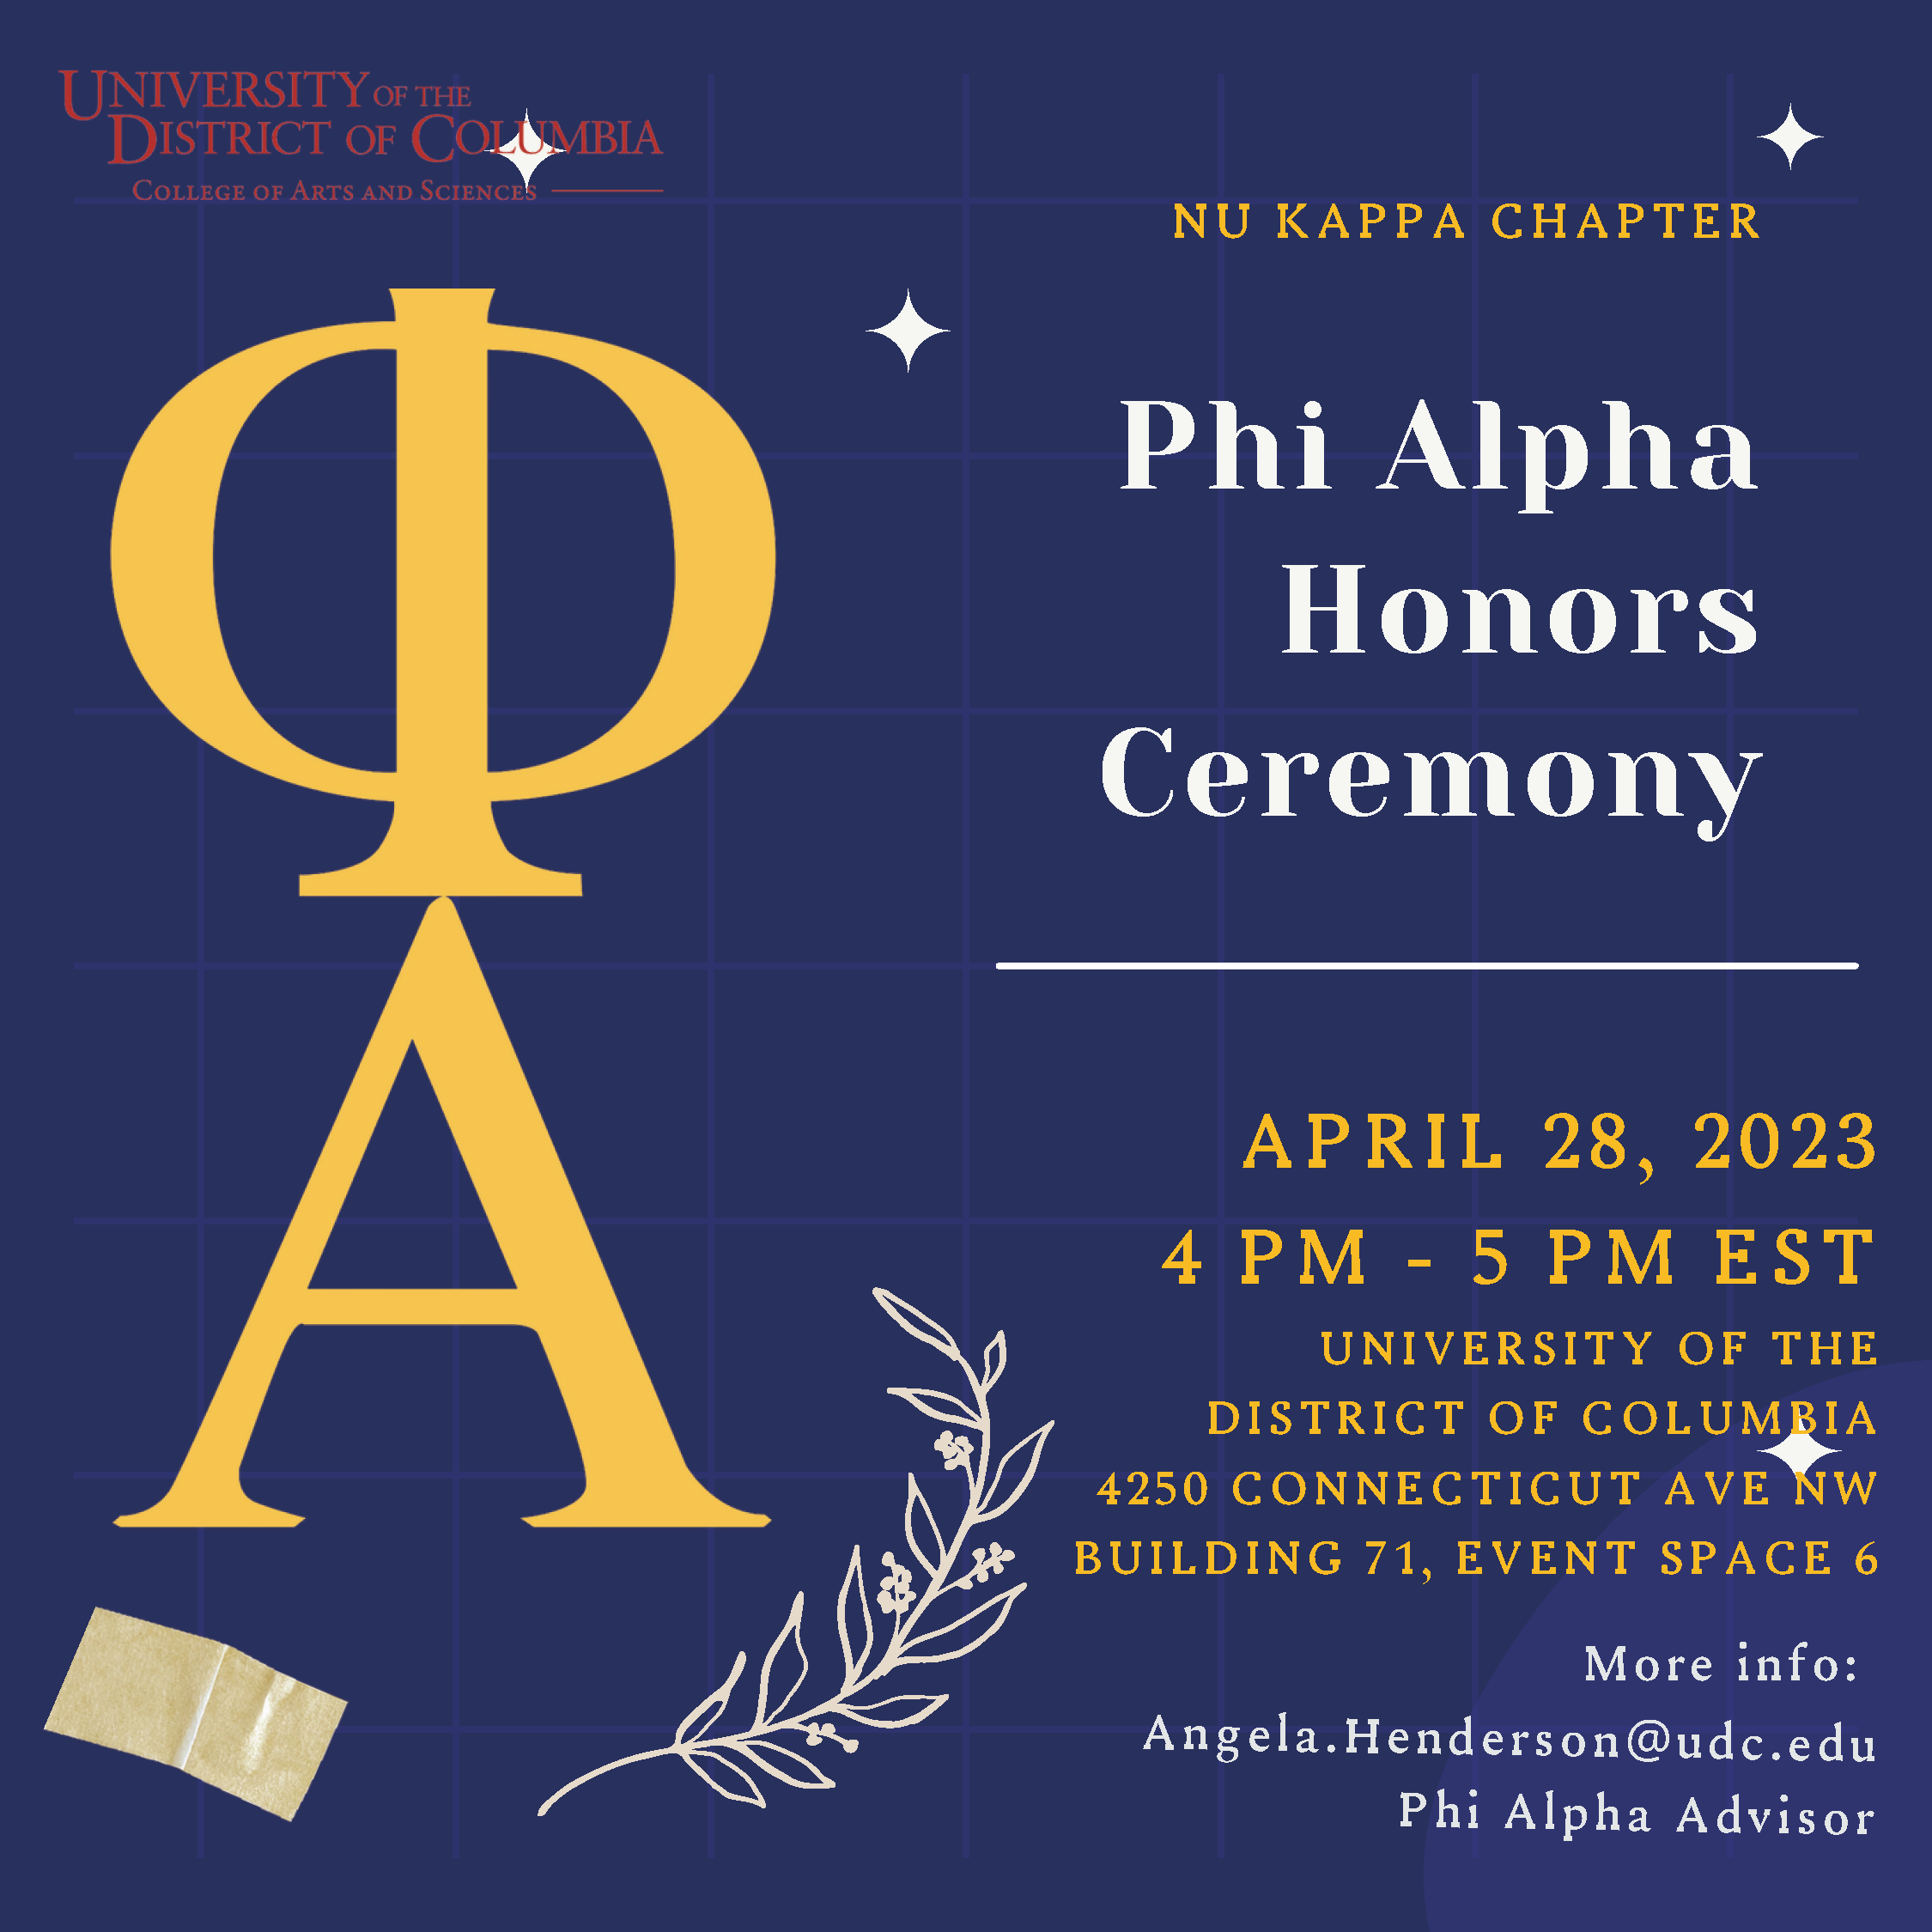 Phi Alpha Honors Ceremony April 28, 2023